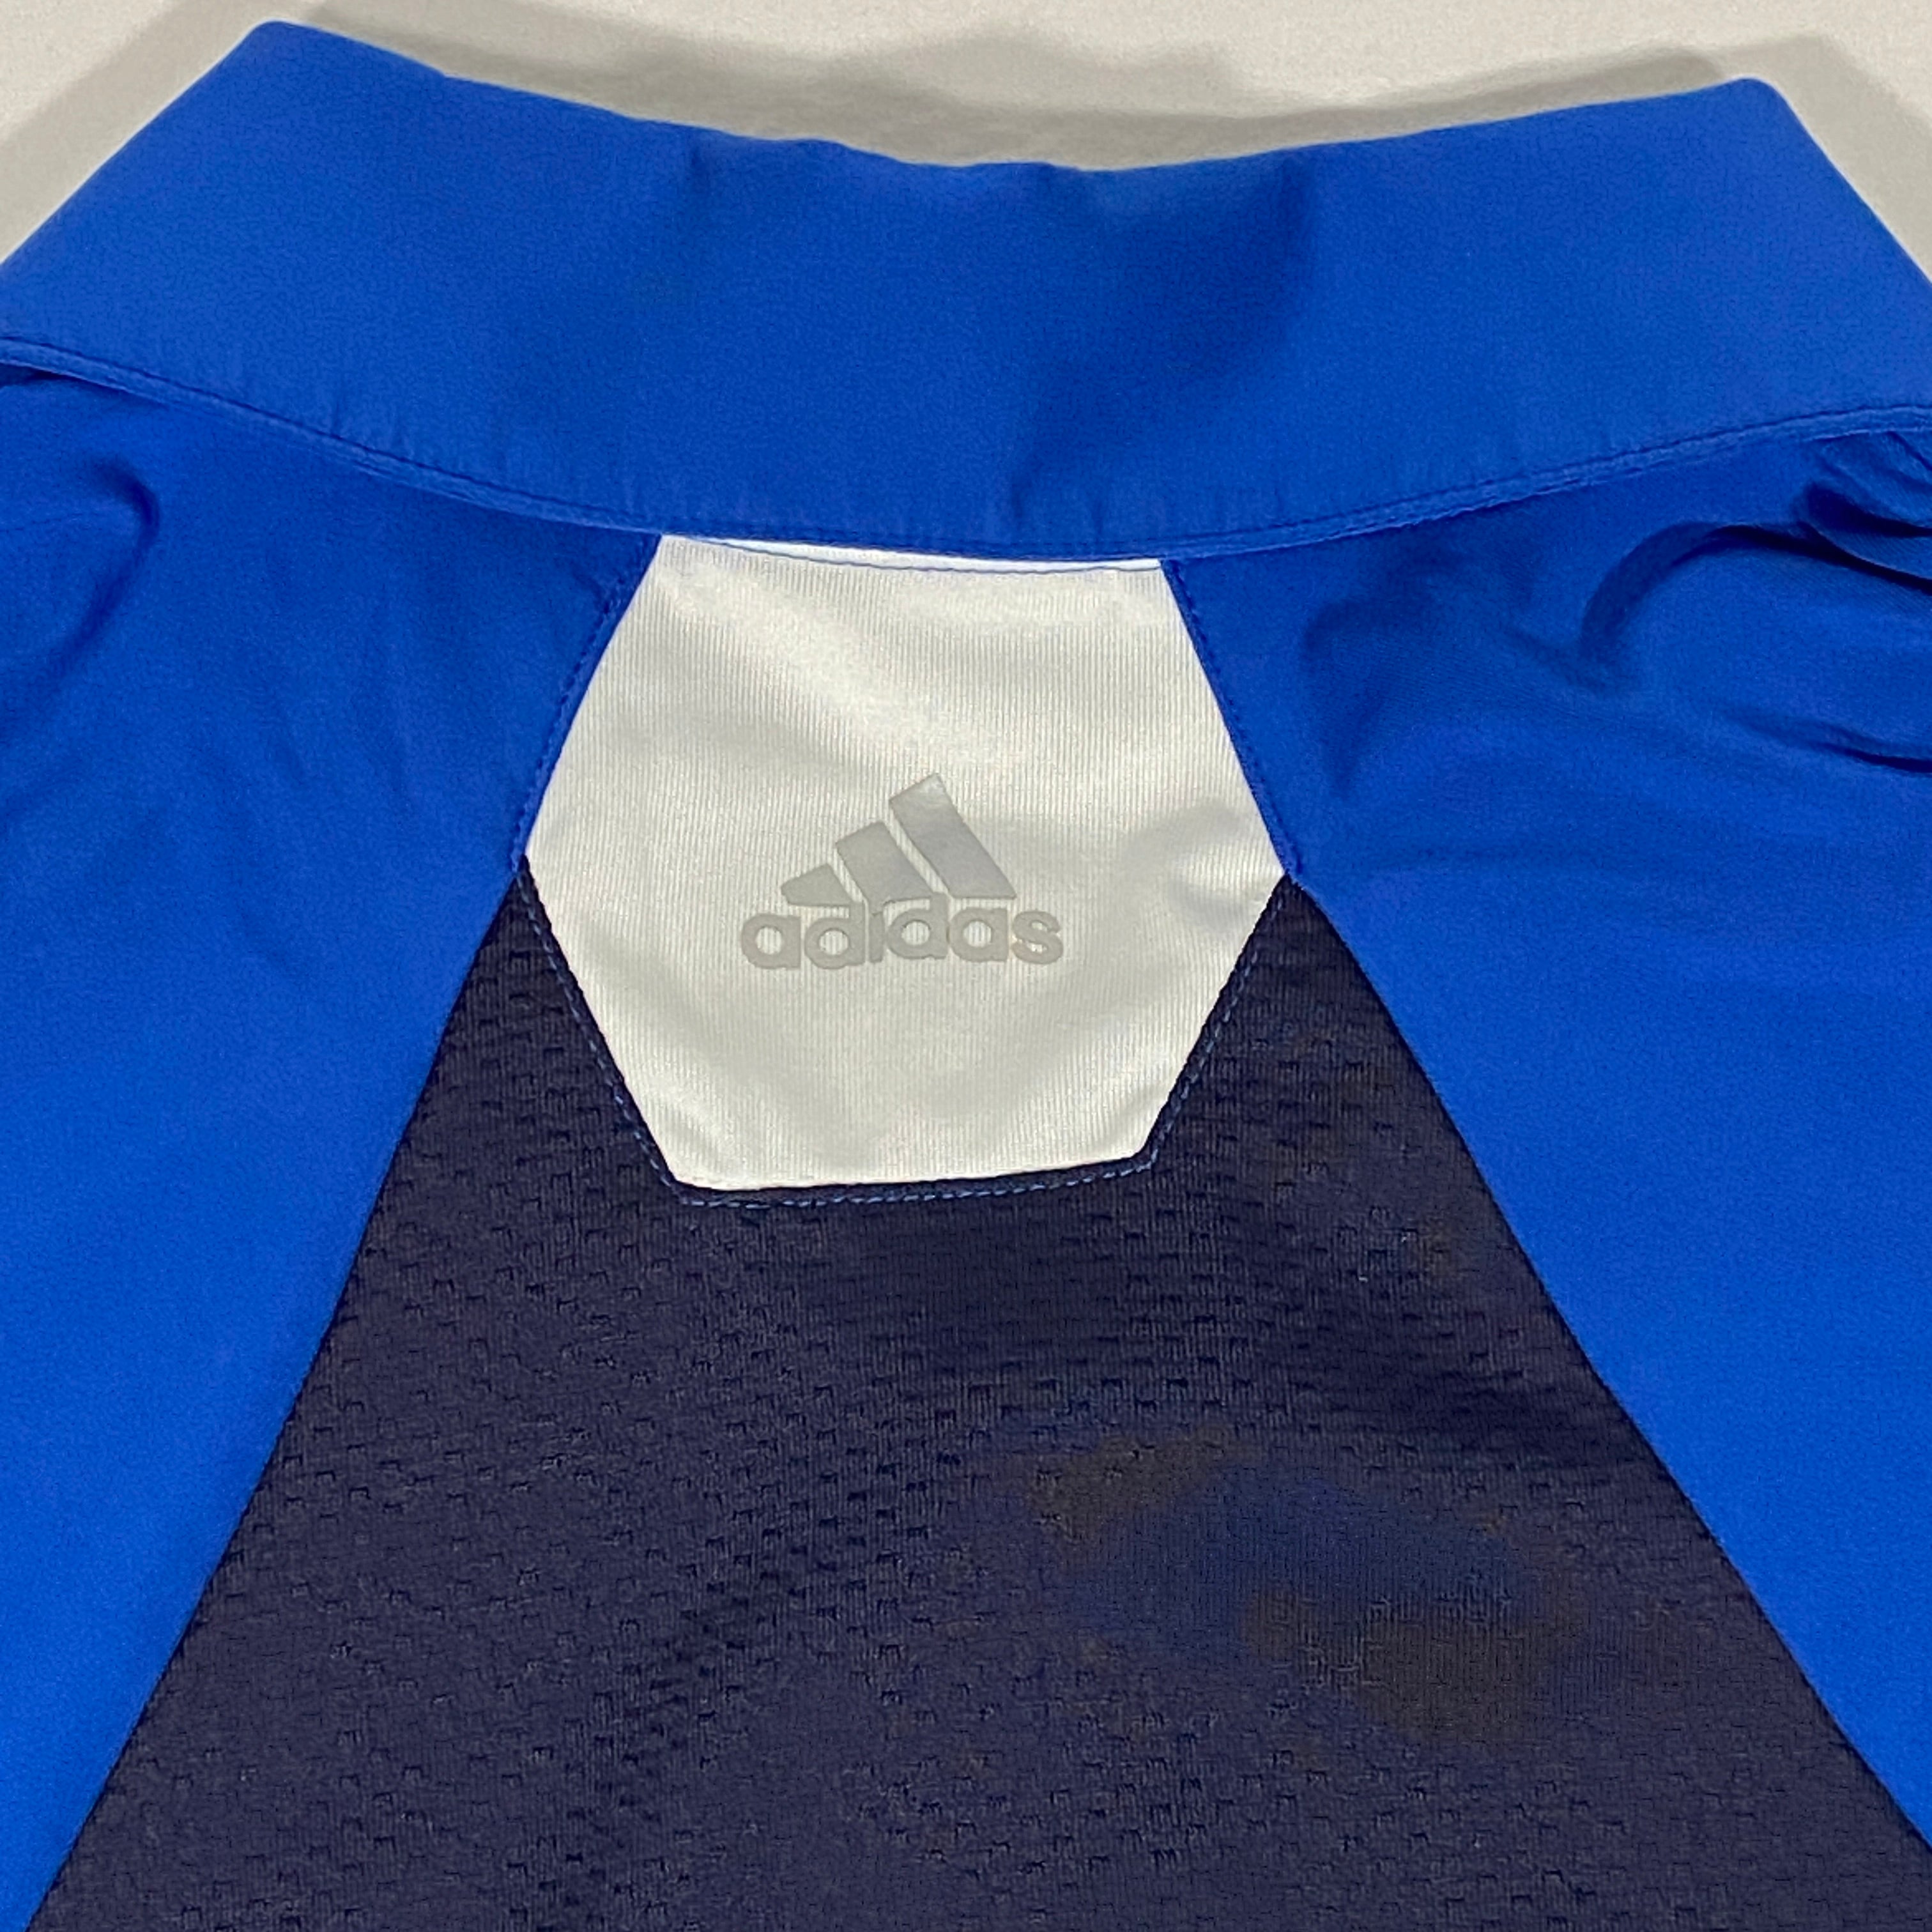 Adidas Men's Climacool Mesh Polo Dark Blue